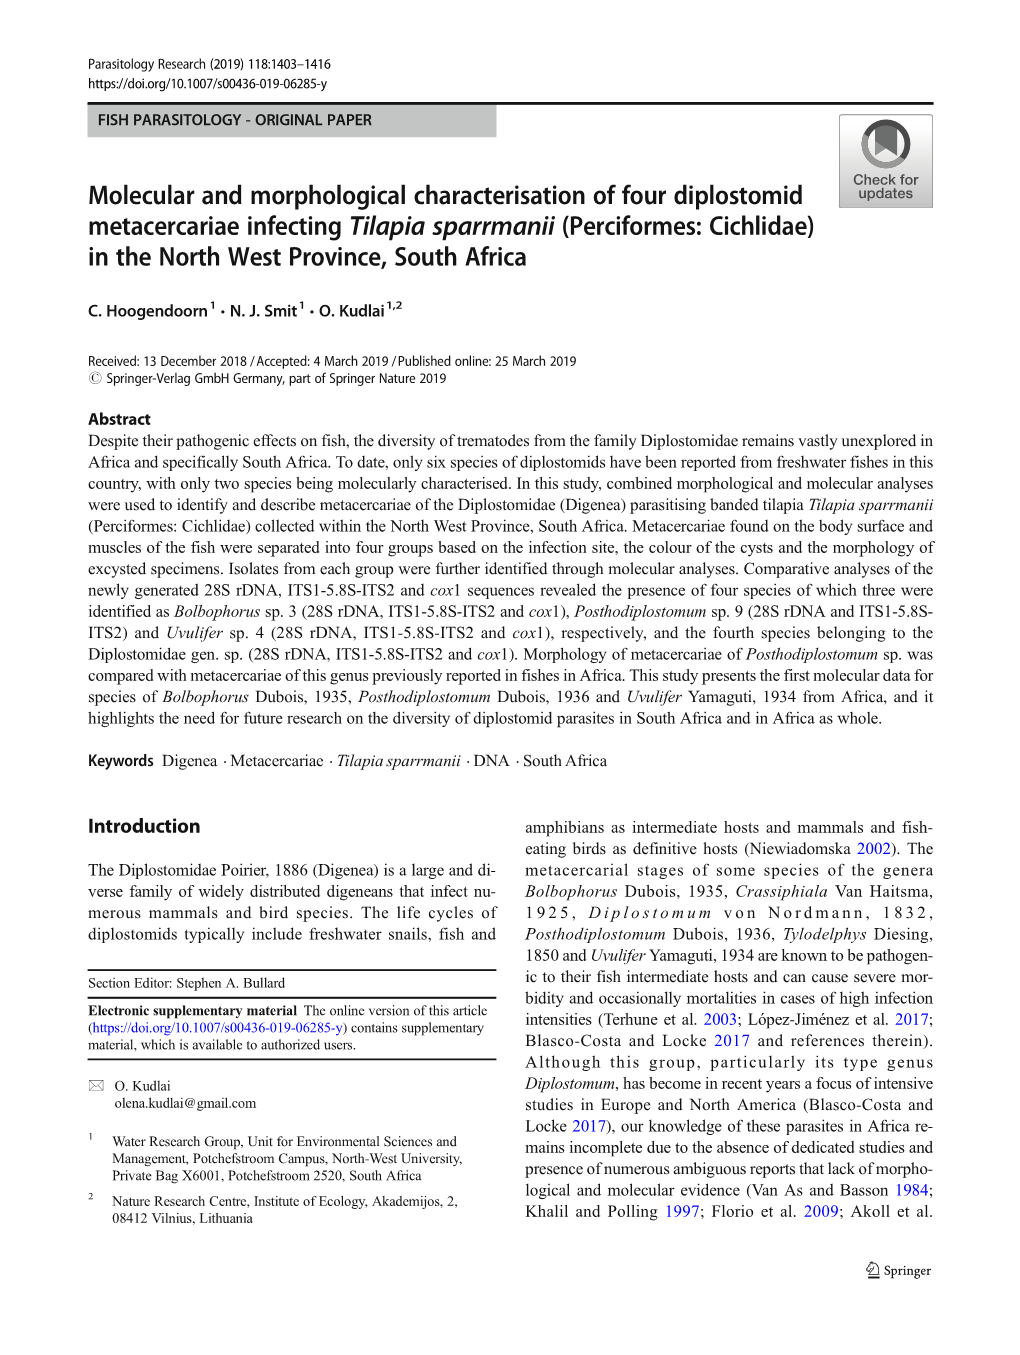 Molecular and Morphological Characterisation of Four Diplostomid Metacercariae Infecting Tilapia Sparrmanii (Perciformes: Cichli